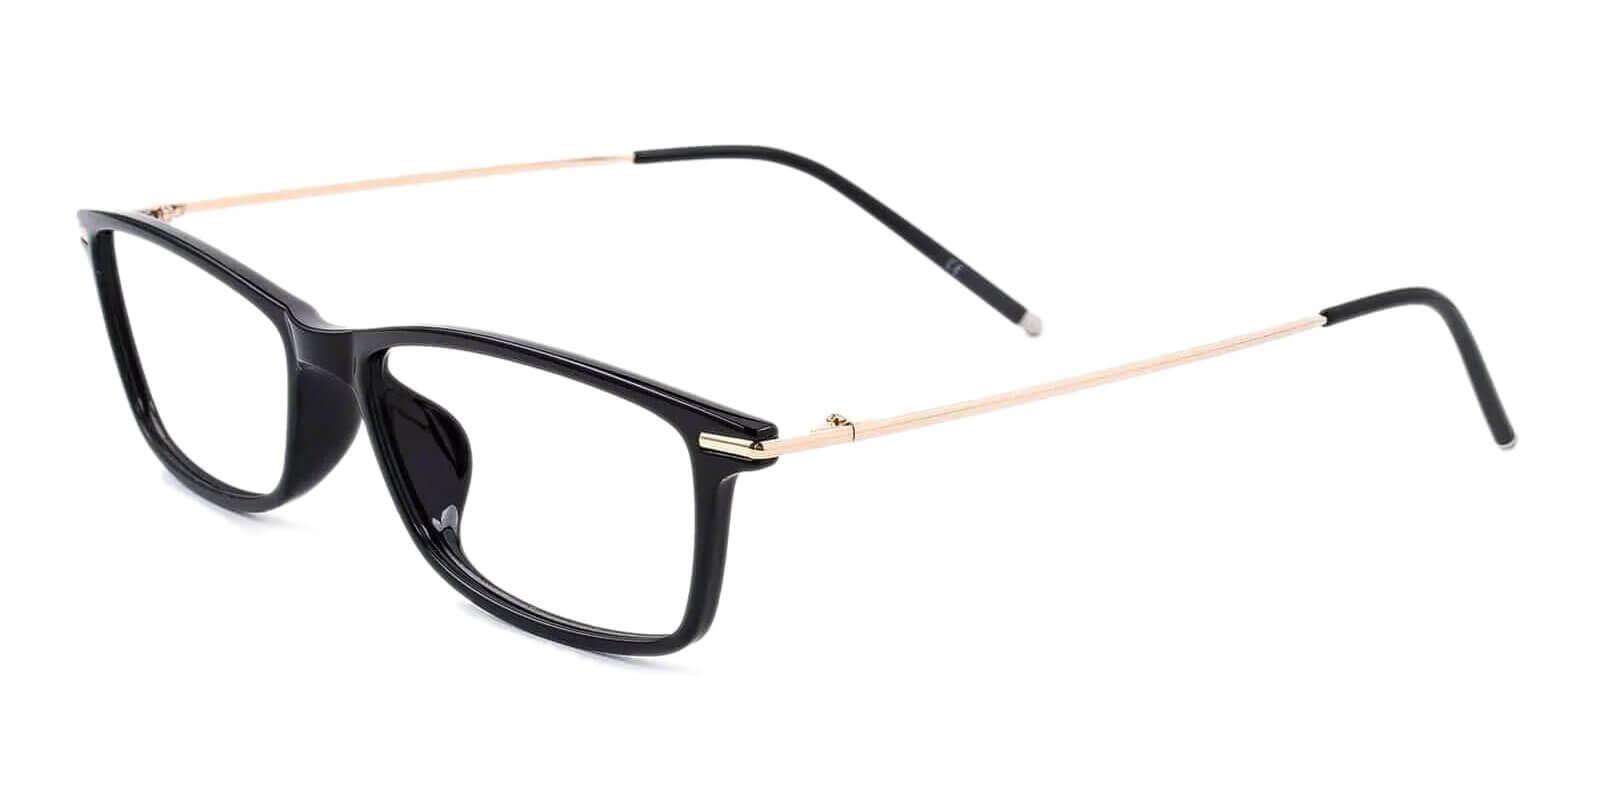 Radcliffe Black TR Lightweight , UniversalBridgeFit , Eyeglasses Frames from ABBE Glasses